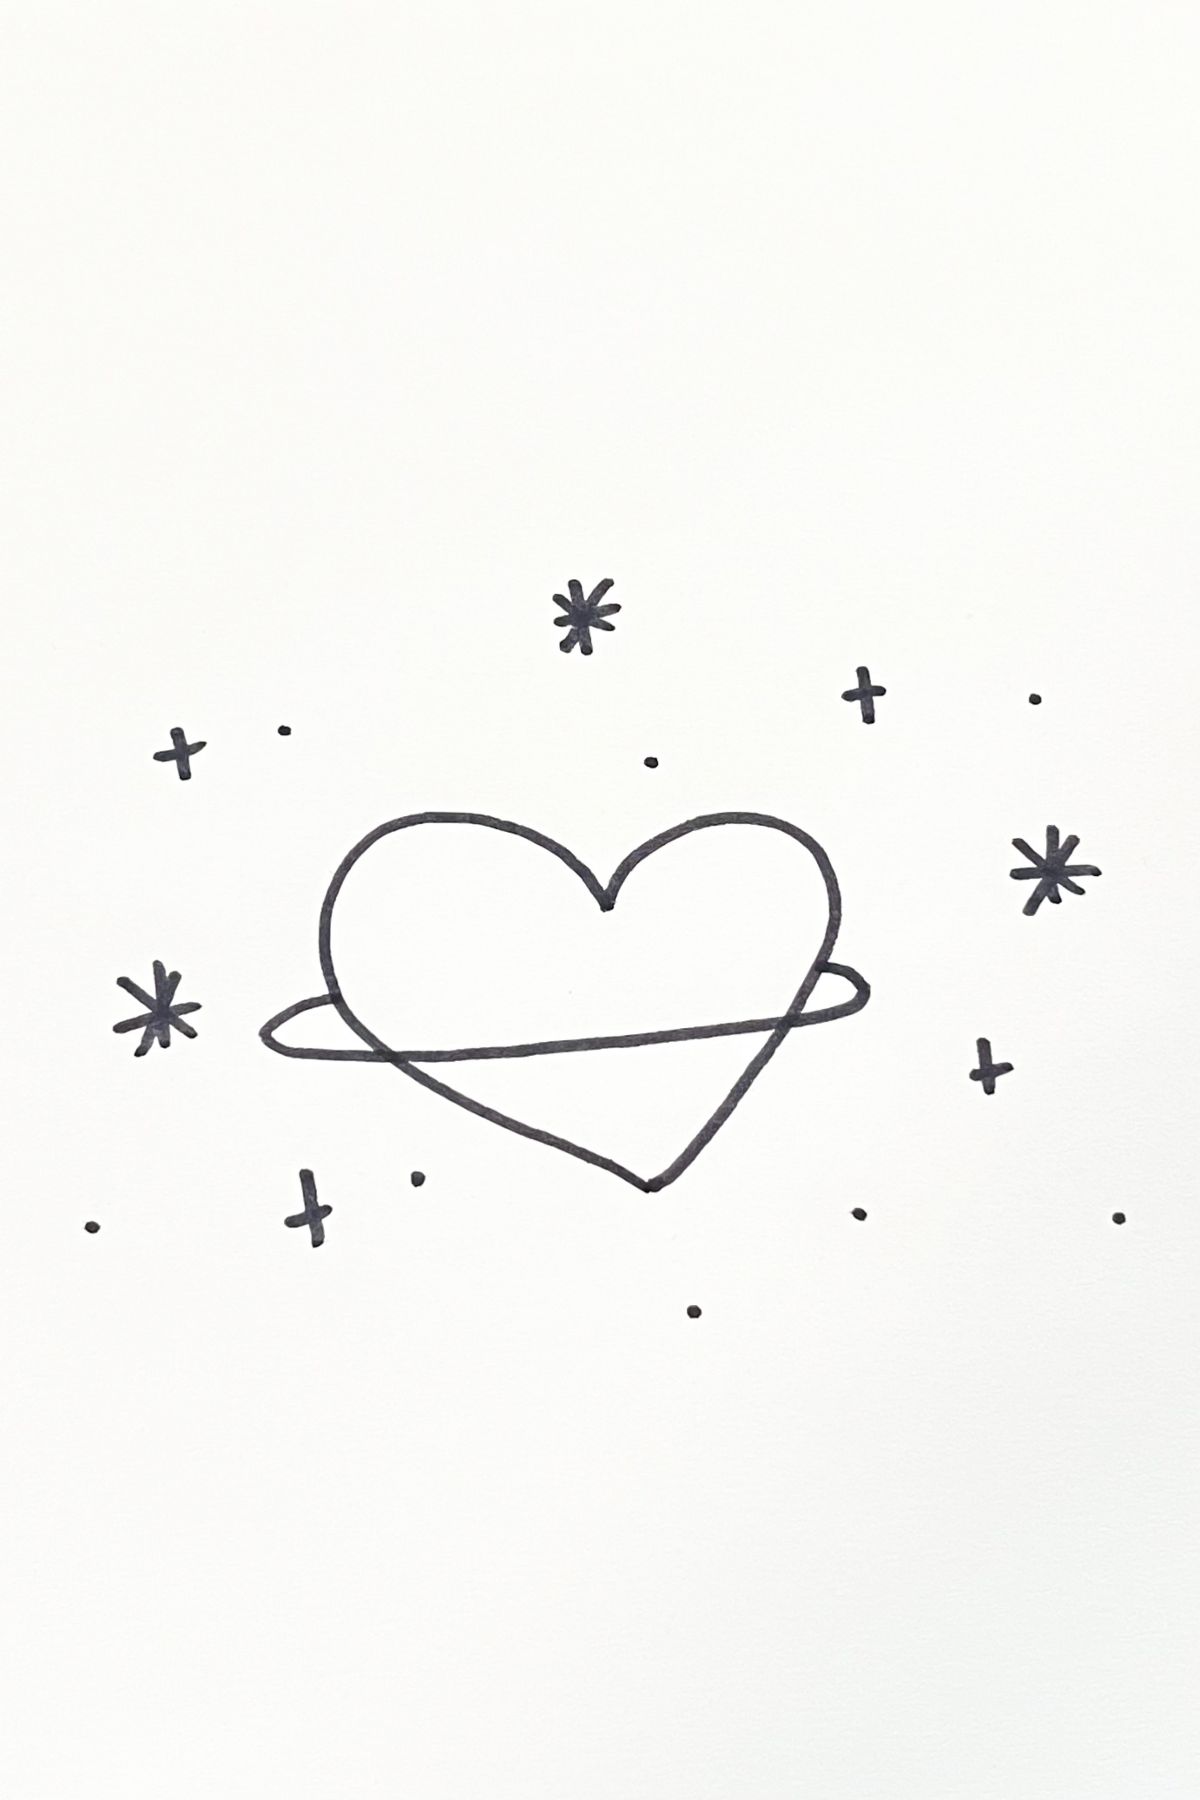 hearts and stars drawing idea